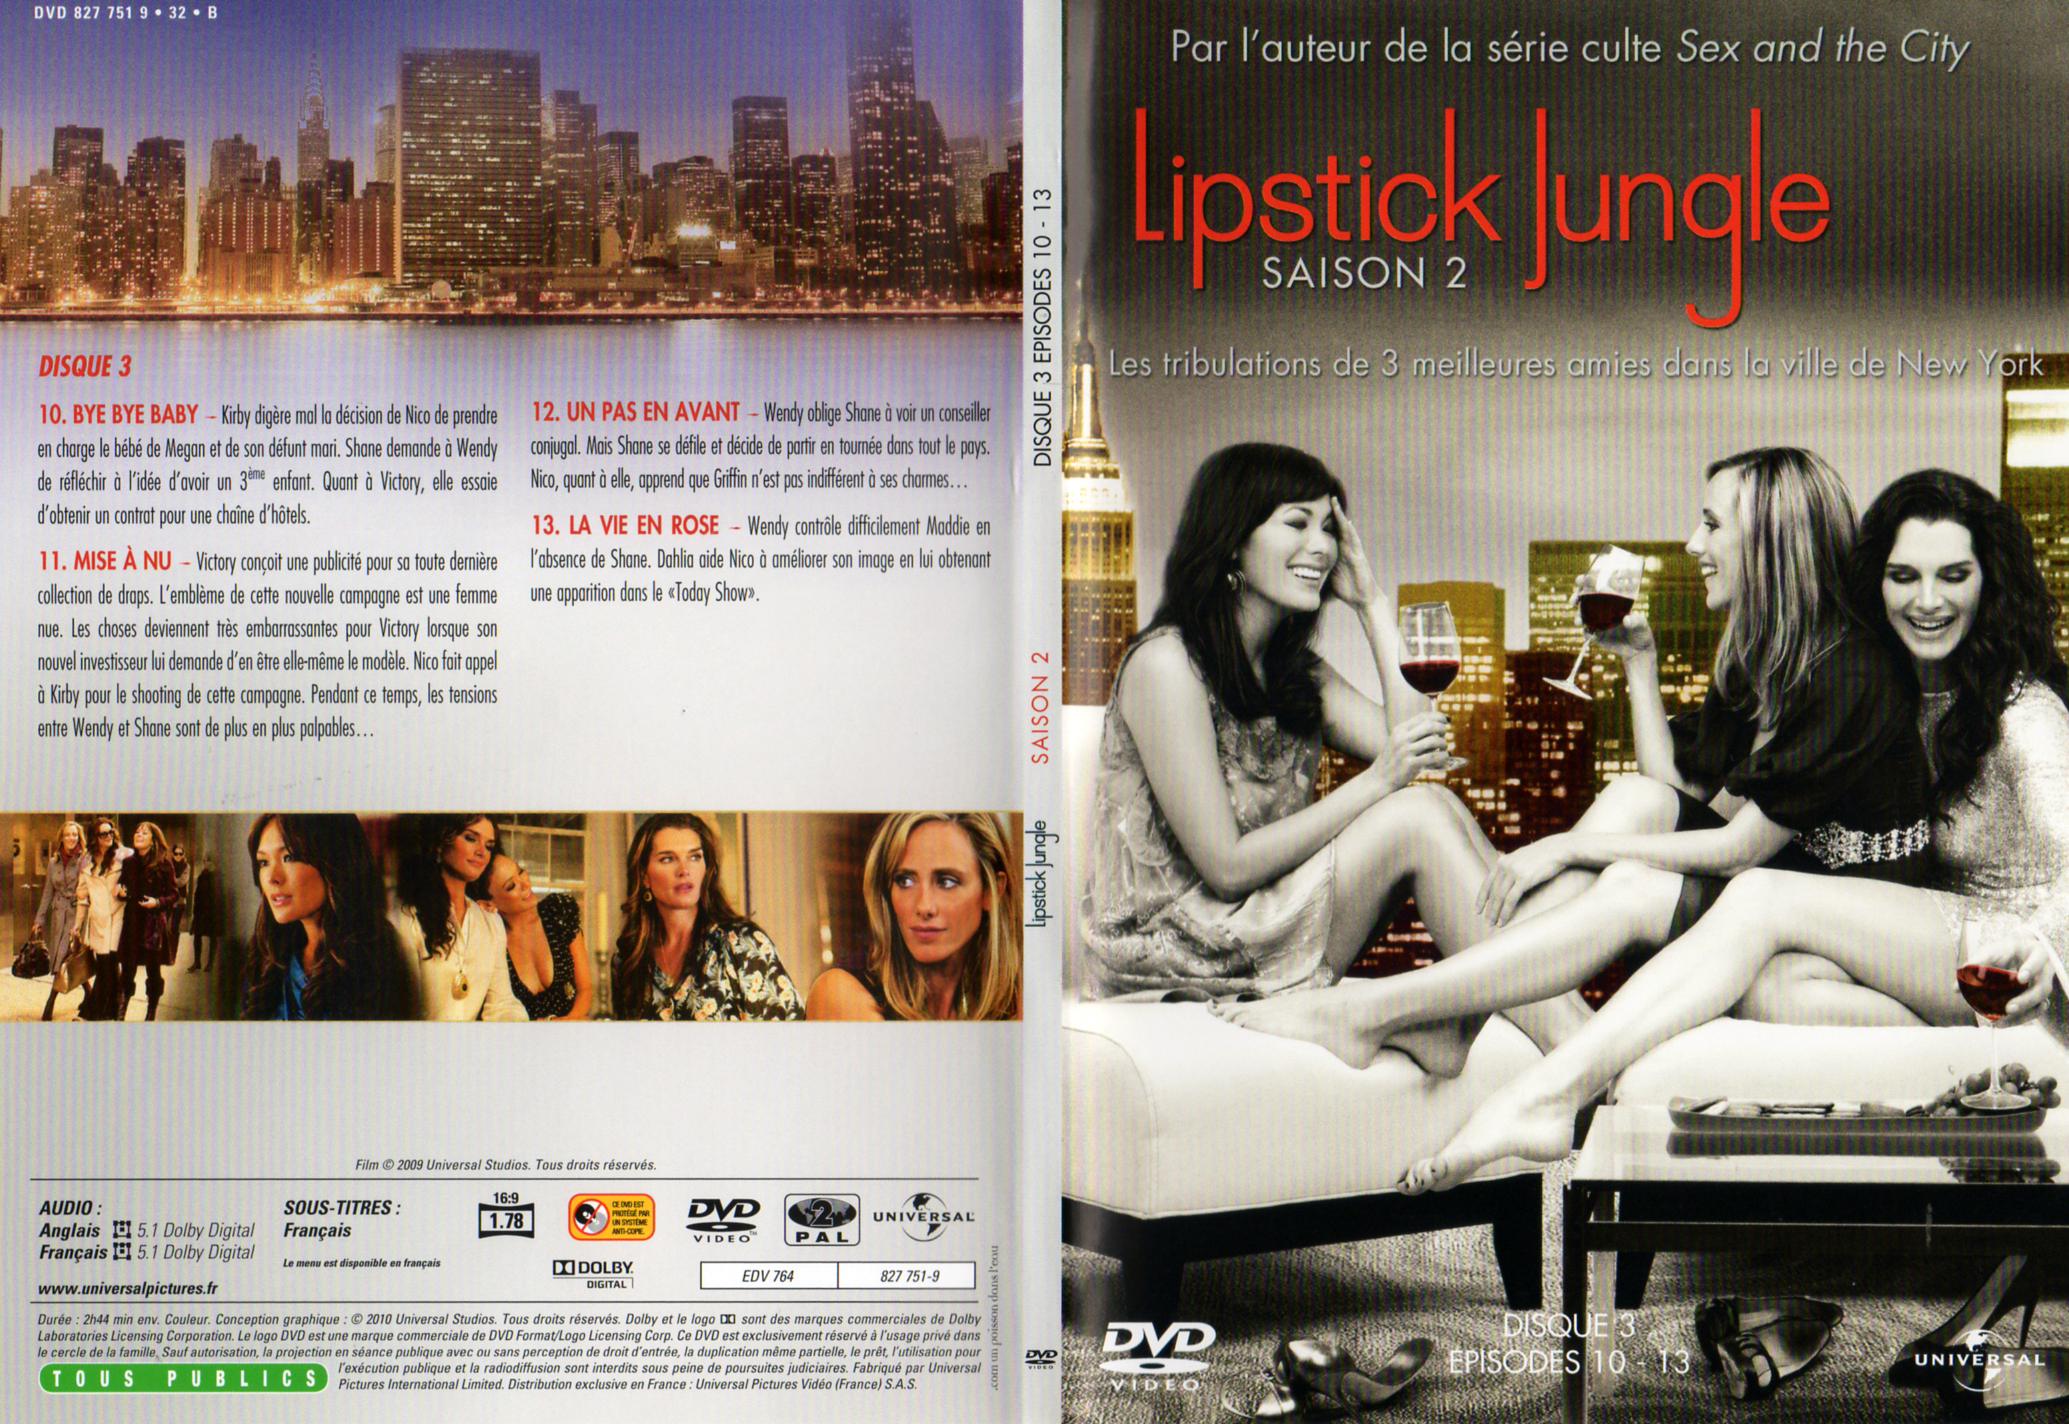 Jaquette DVD Lipstick jungle Saison 2 DVD 2